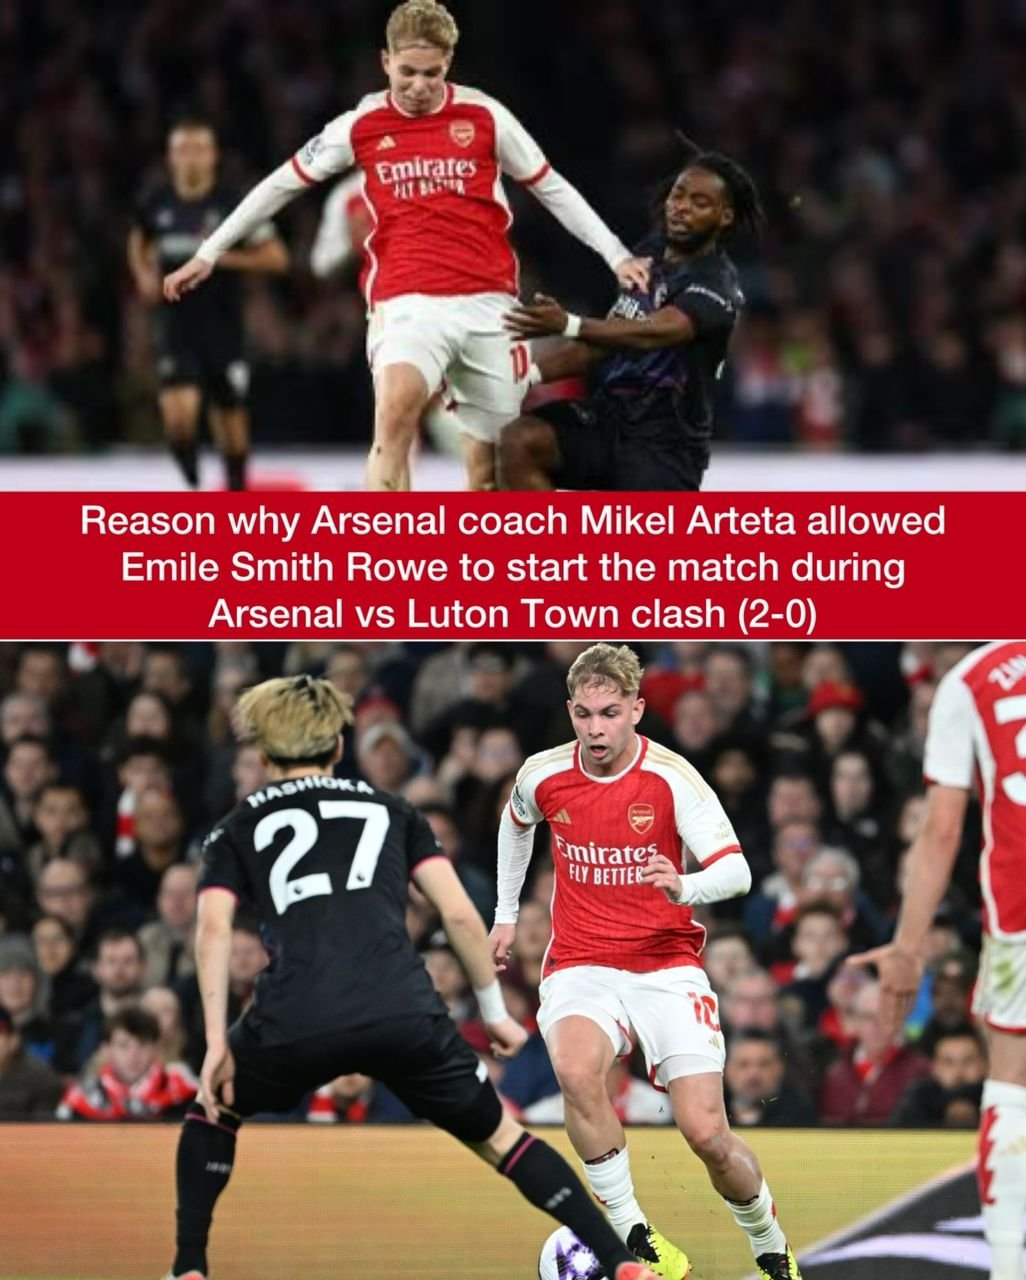 Reason why Arsenal coach Mikel Arteta allowed Emile Smith Rowe to start the match during Arsenal vs Luton Town clash (2-0)